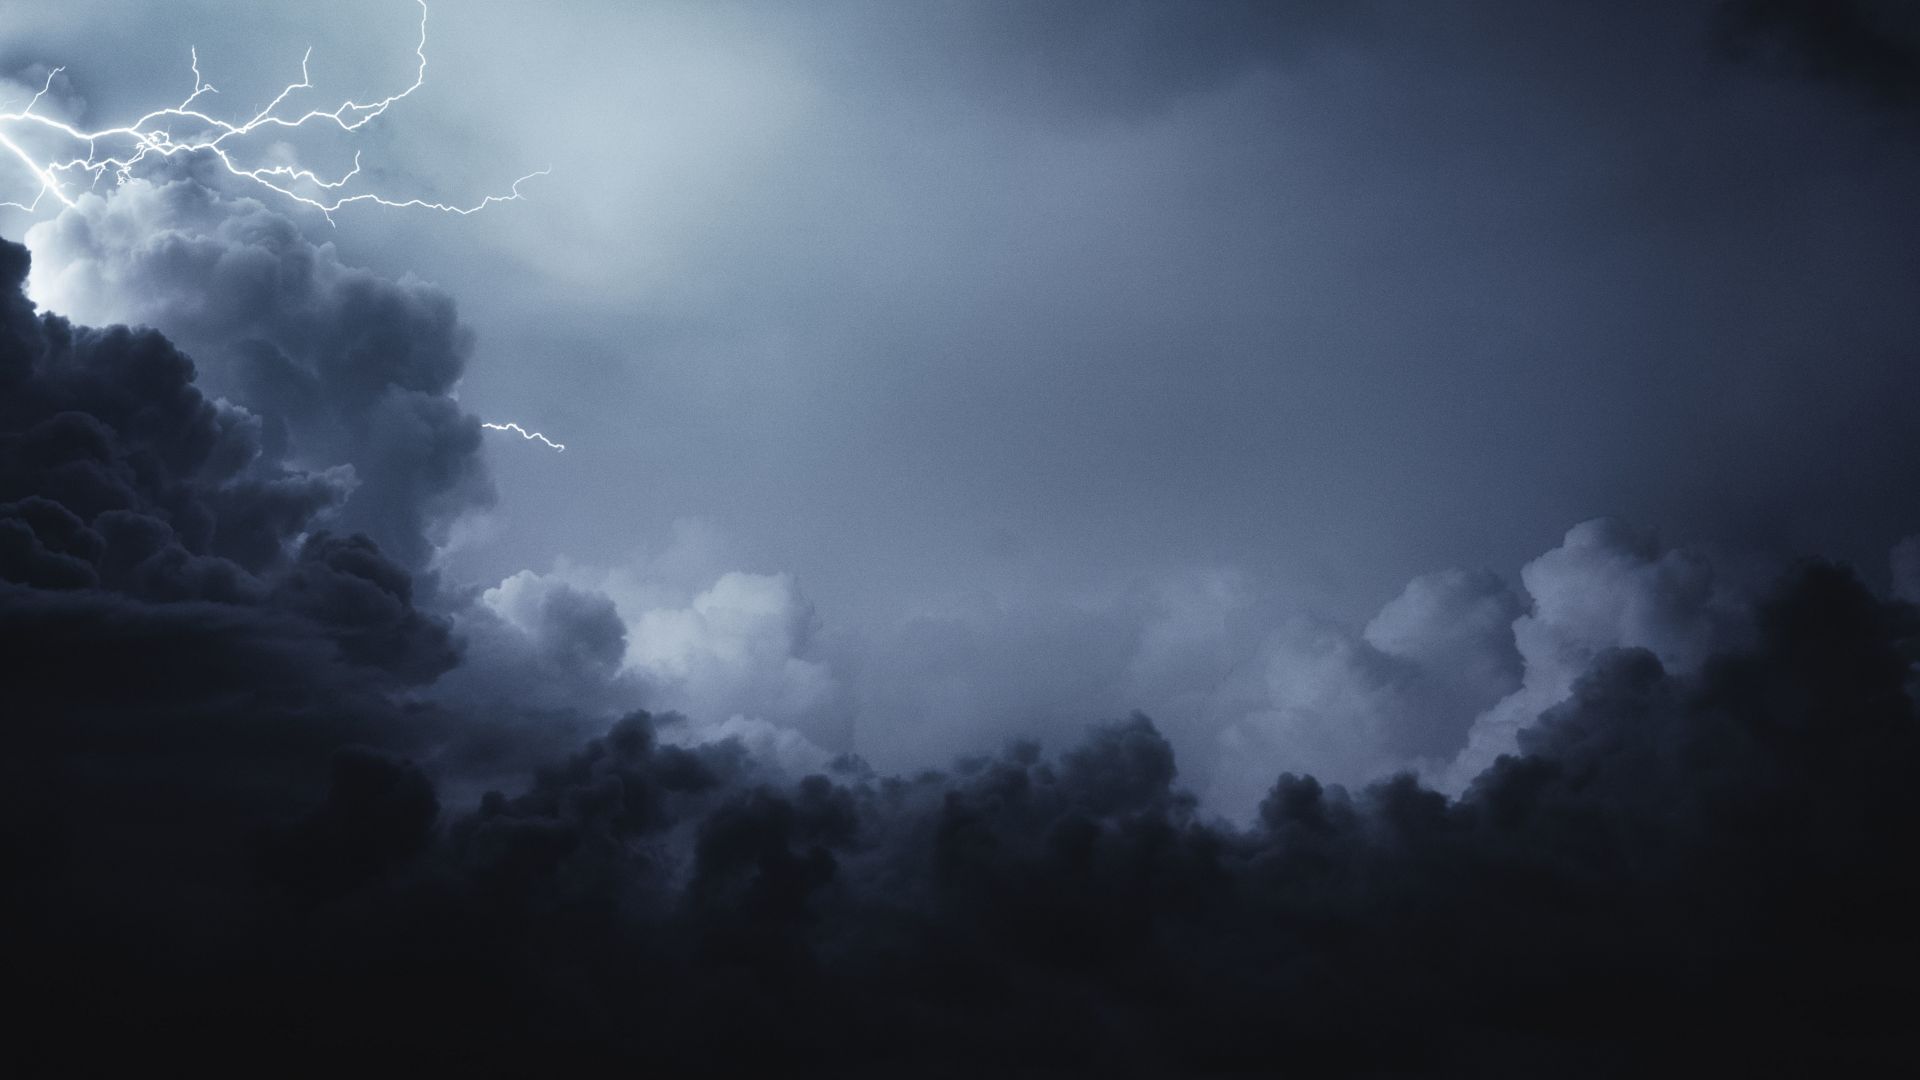 Lightning, dark, sky, clouds, storm wallpaper, HD image, picture, background, 328fef